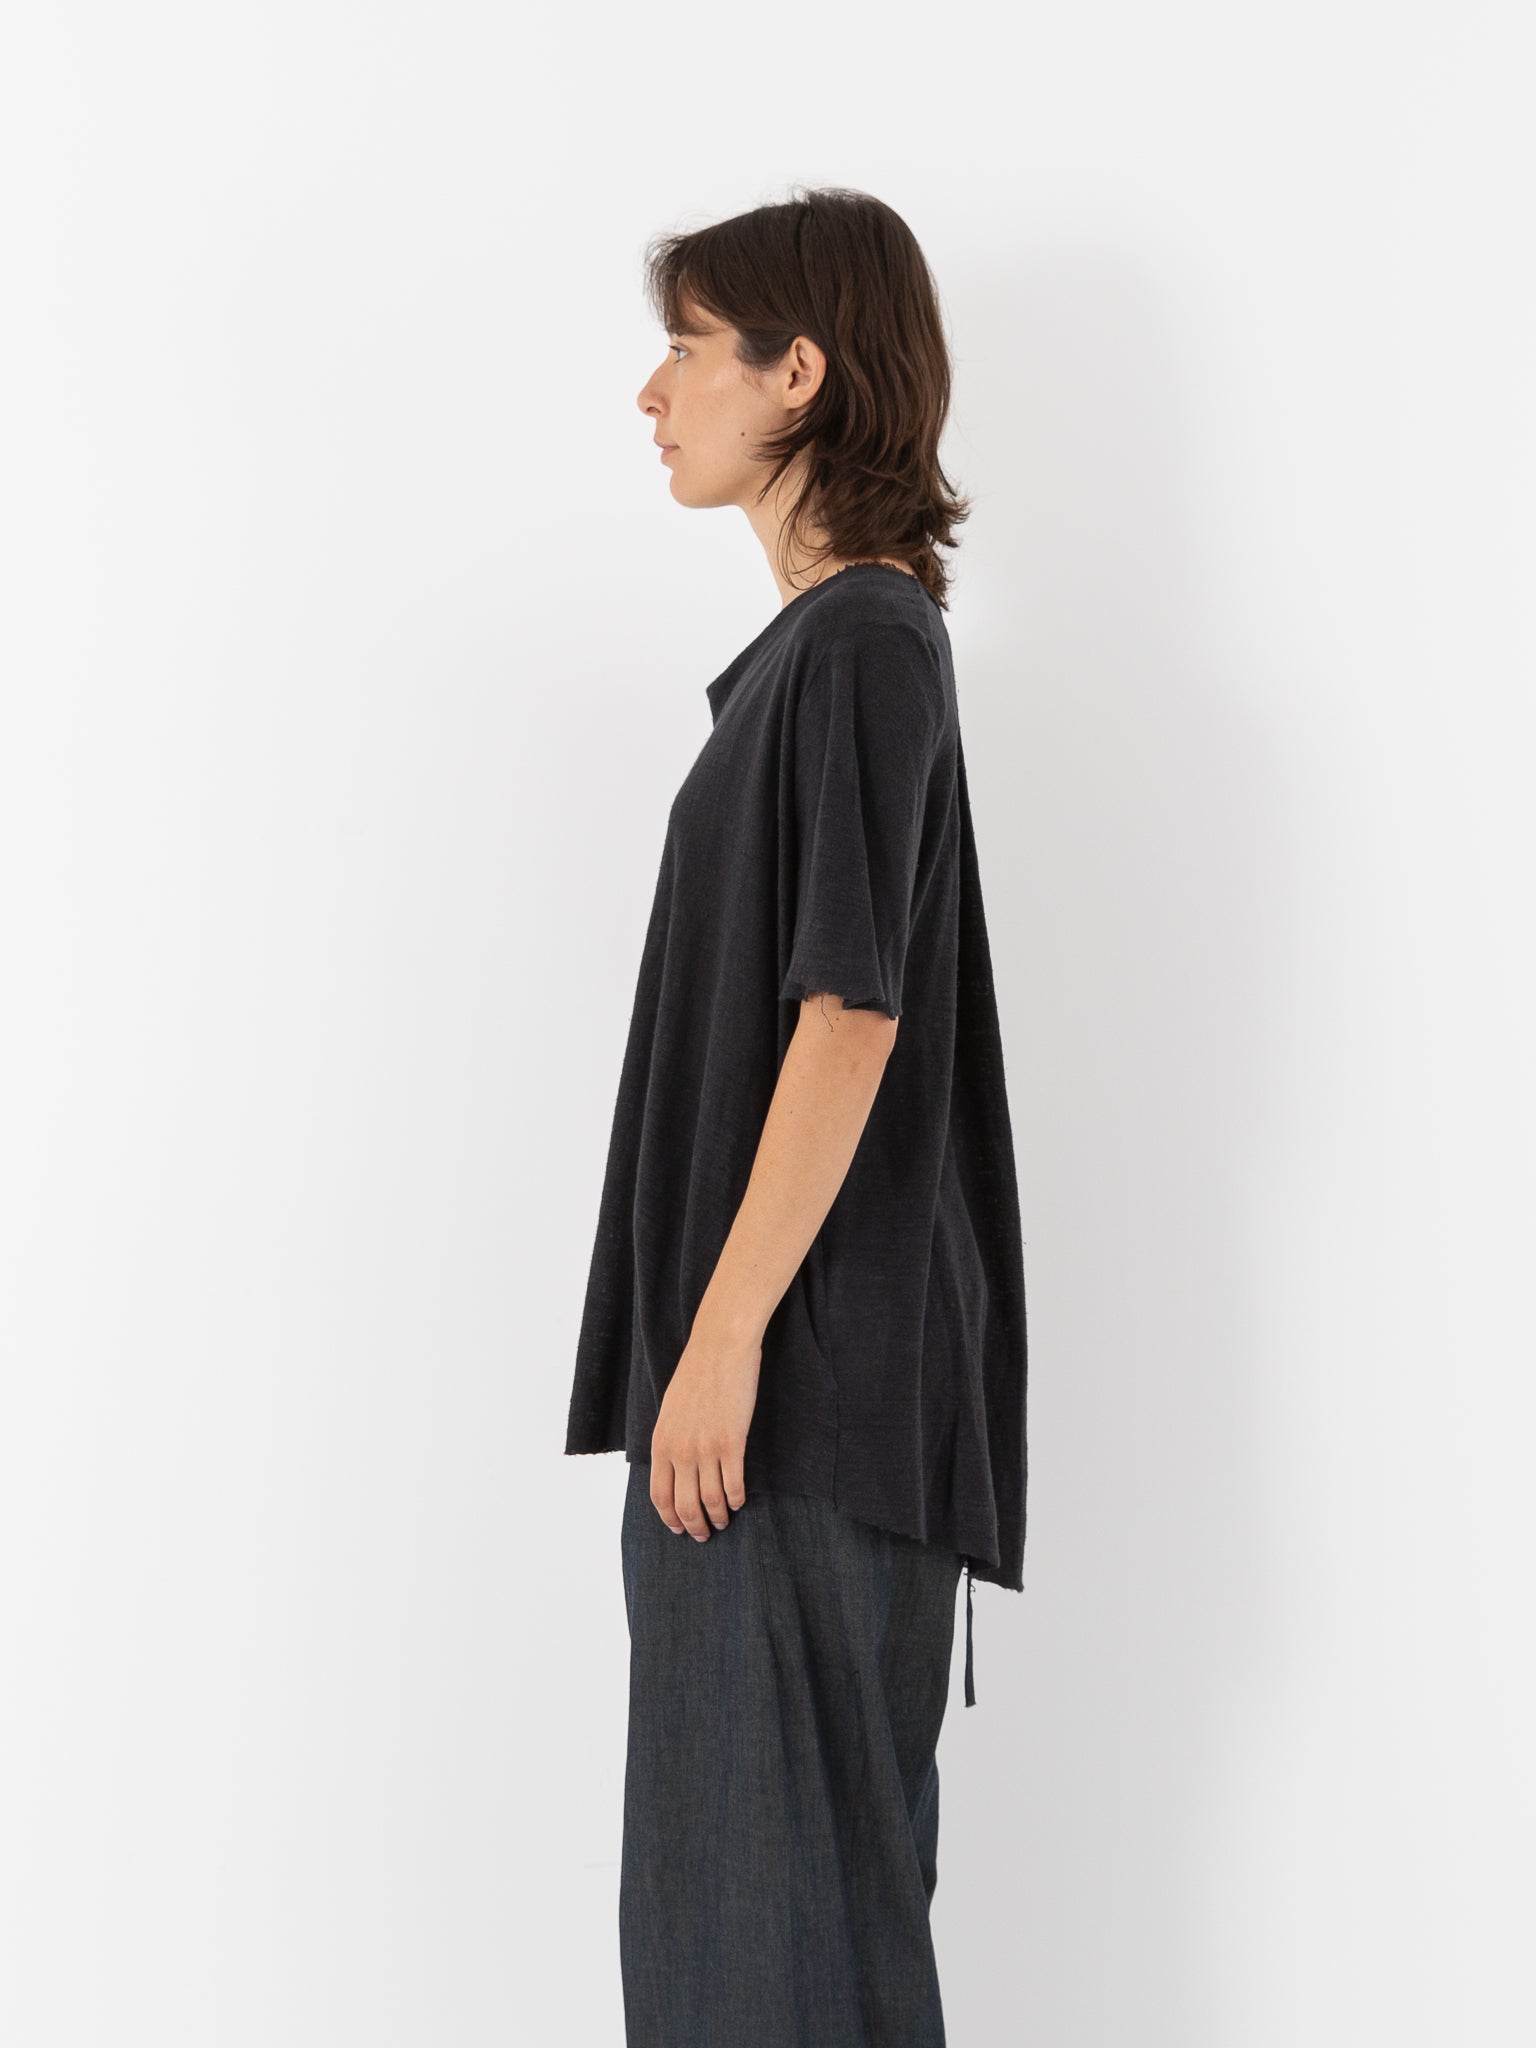 Atelier Suppan Tee Shirt, Black - Worthwhile